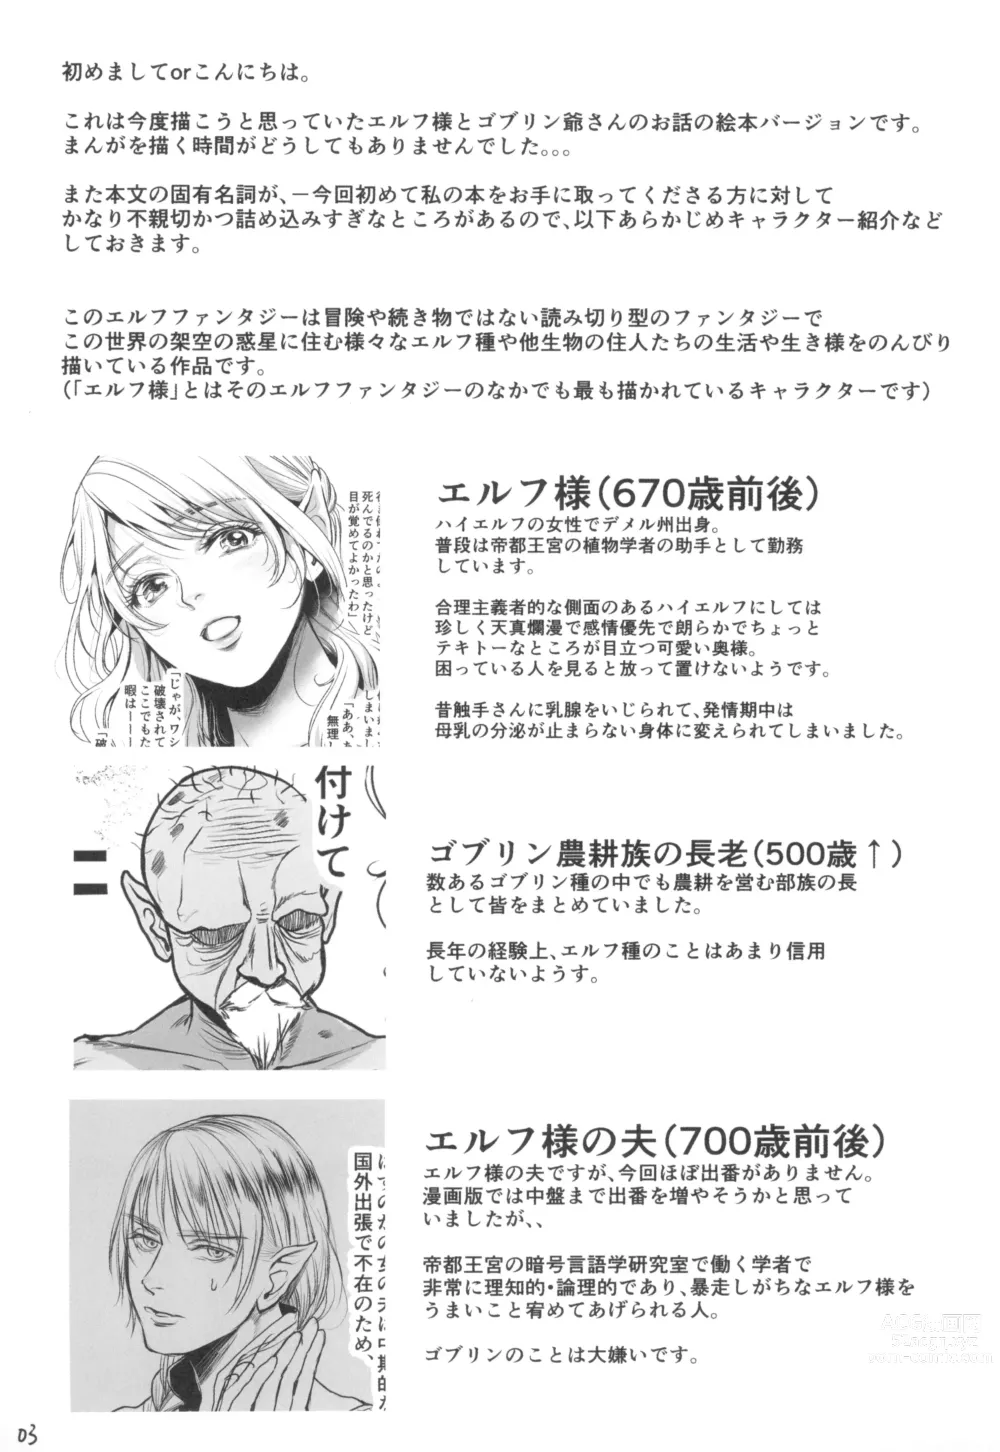 Page 5 of doujinshi Youkaigo Lv. 4